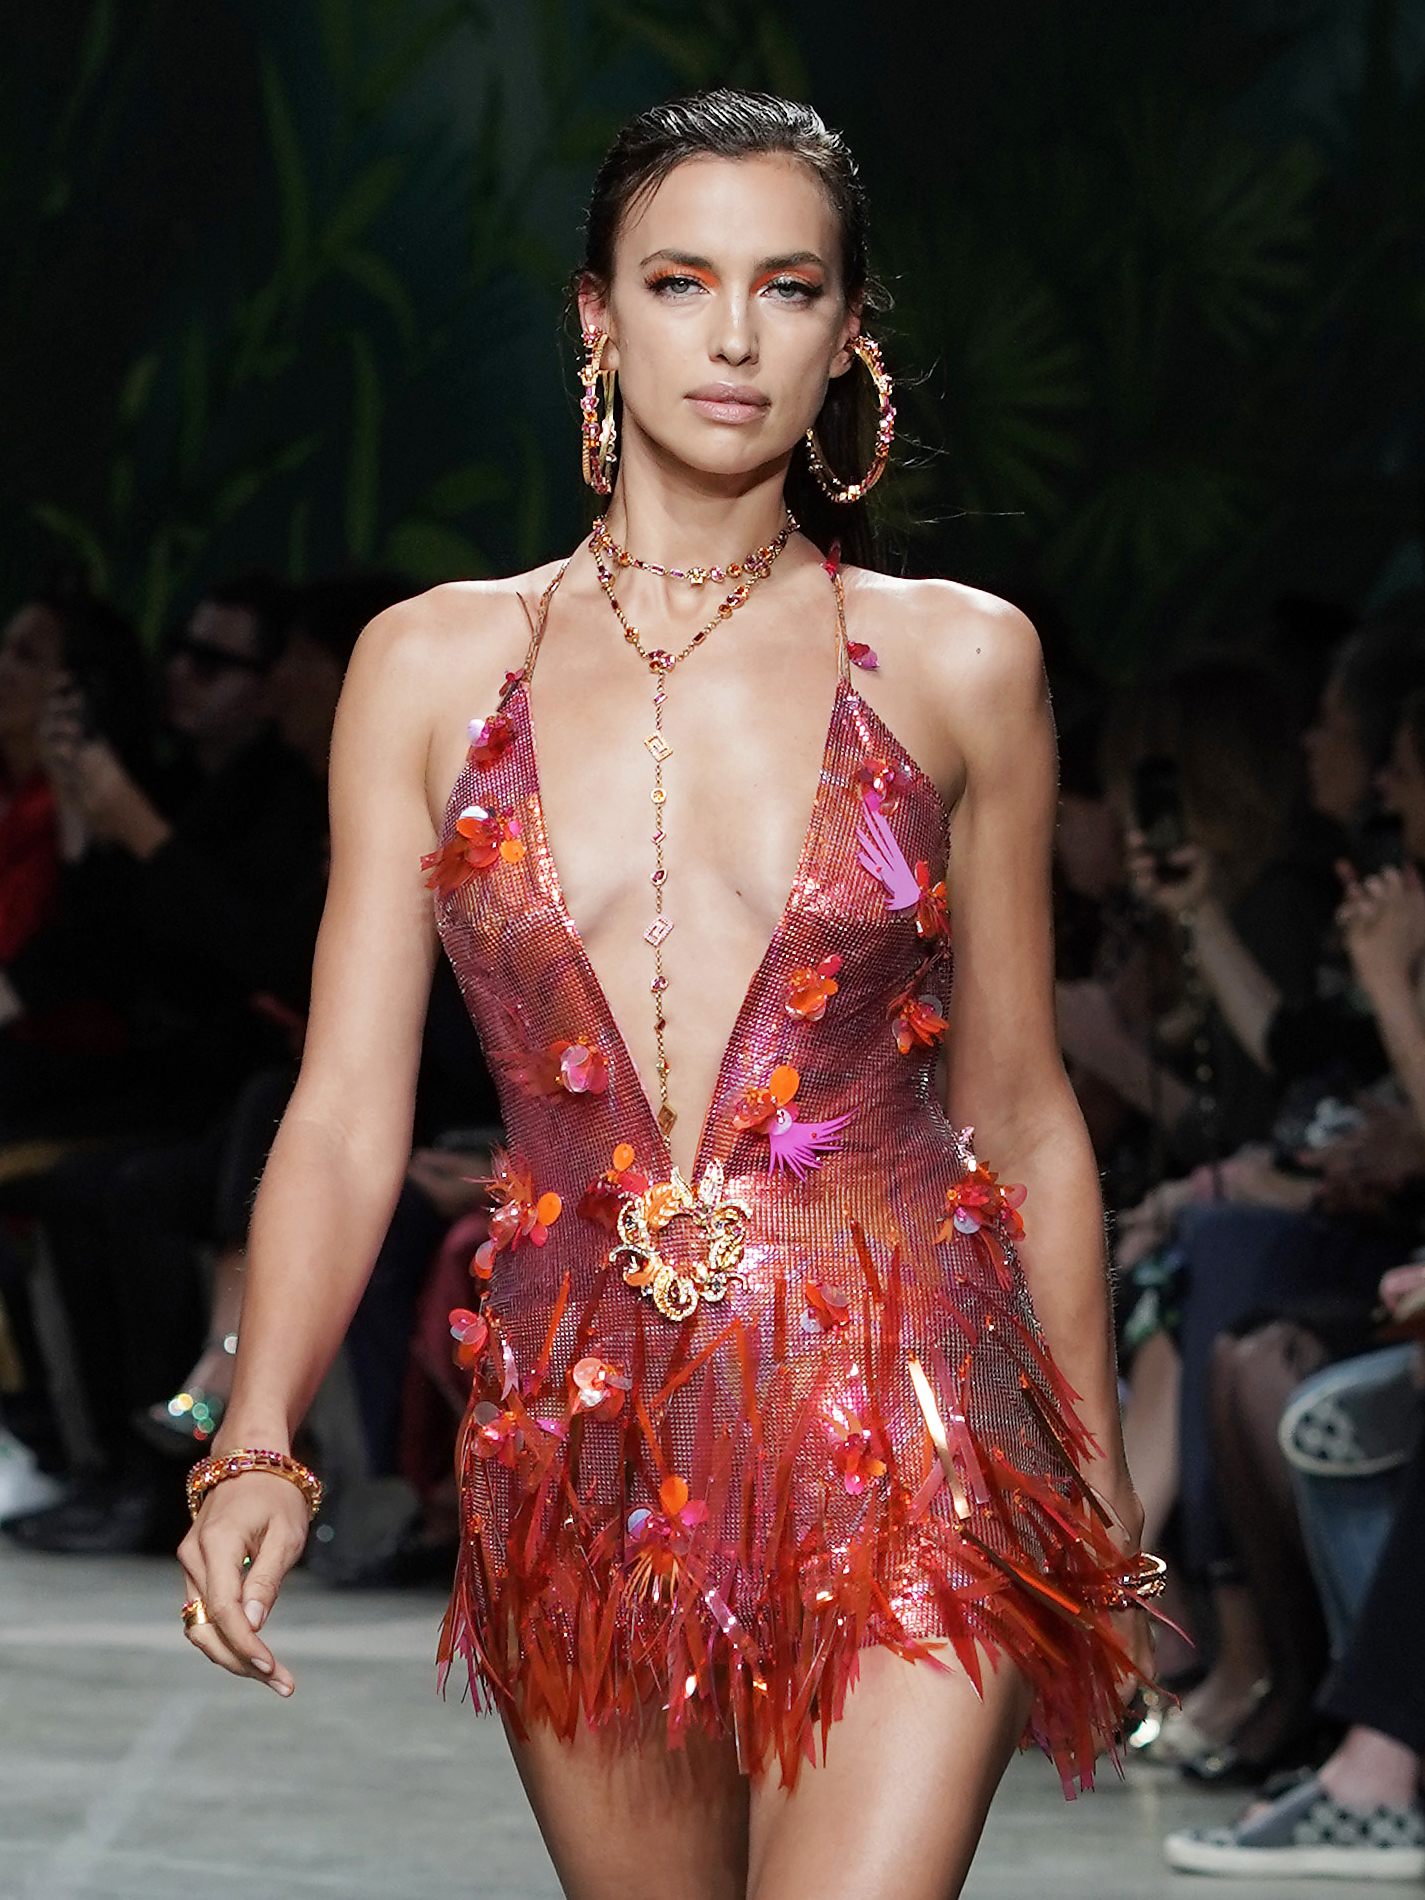 6 pretty spring 2020 jewelry trends to try // Irina Shayk on the Versace runway